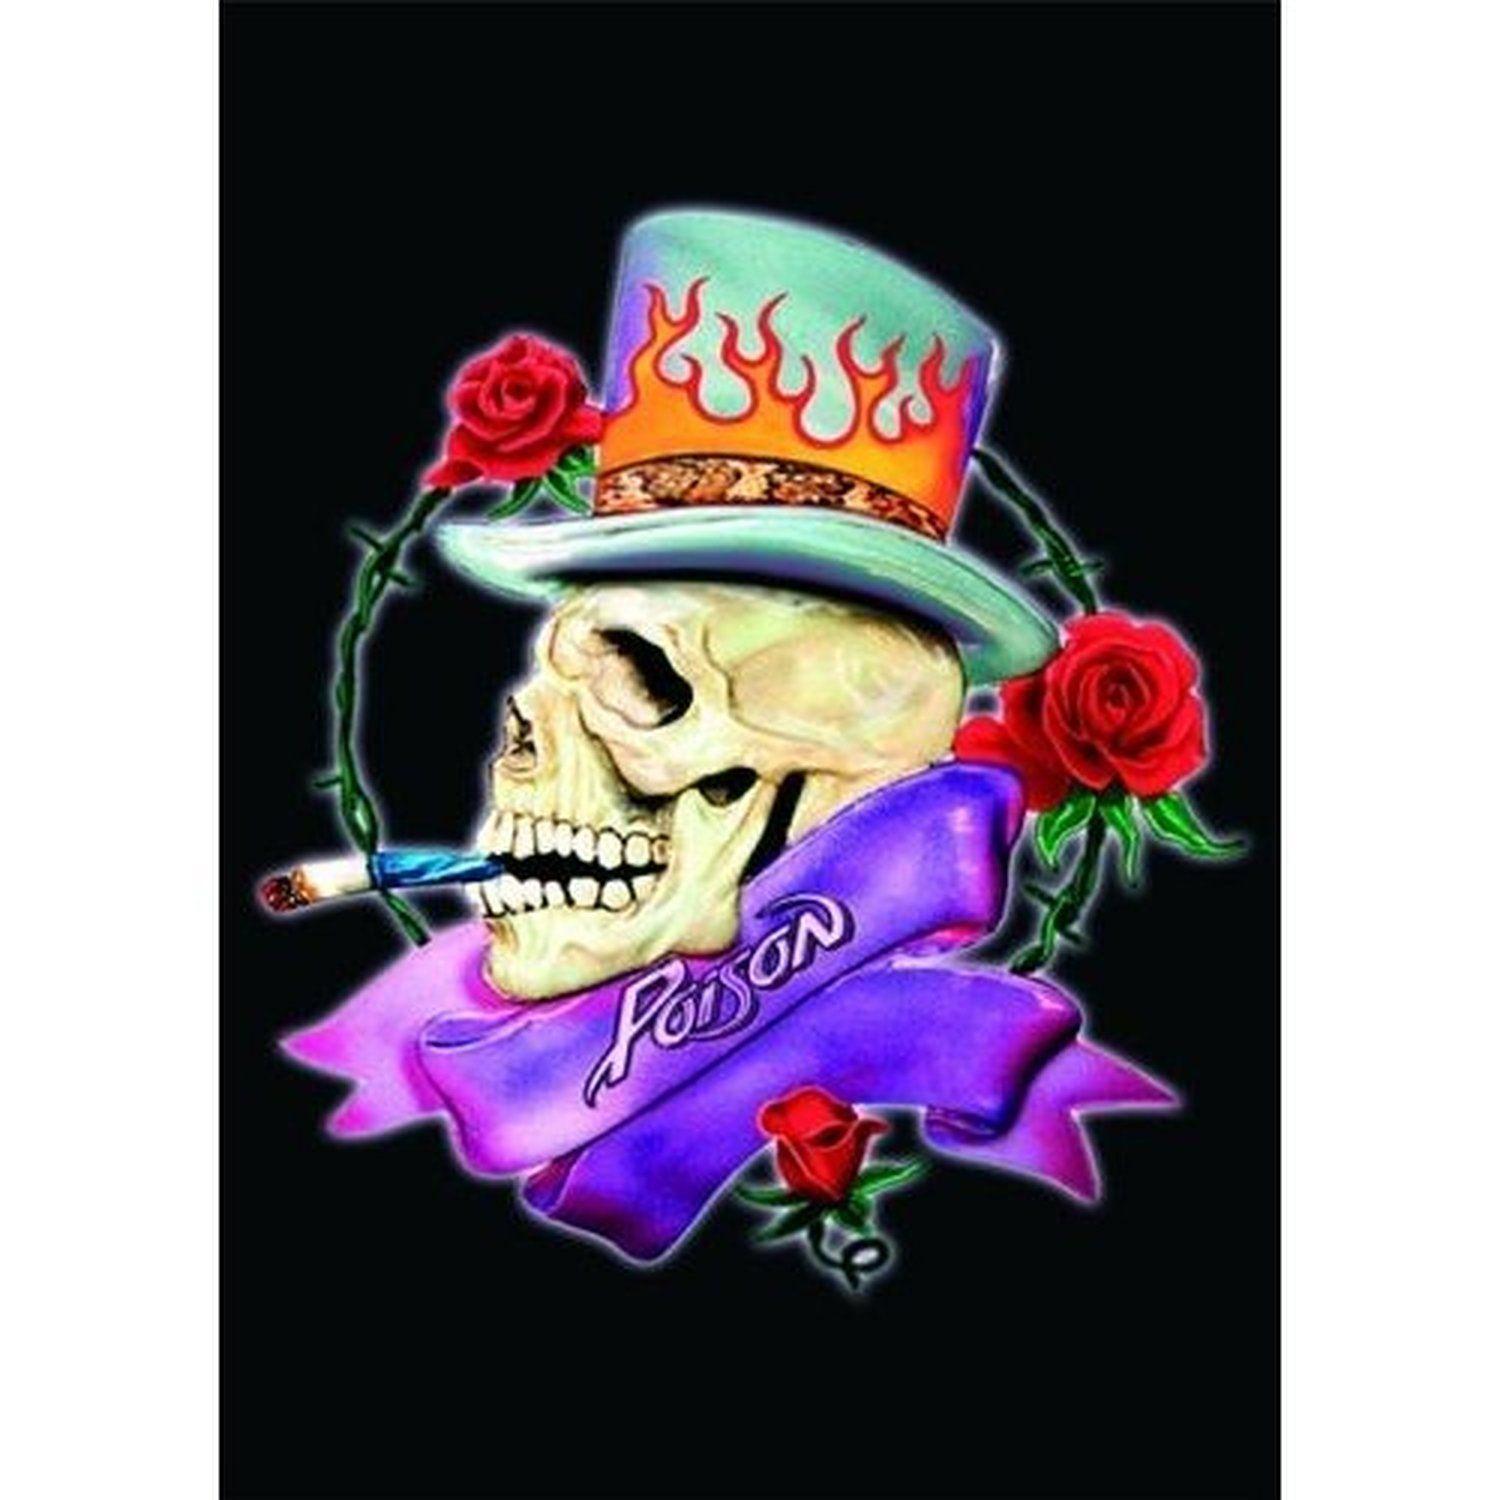 Poison Band Logo - Poison Smoking Skull Band Logo Postcard Picture Album Cover Image ...